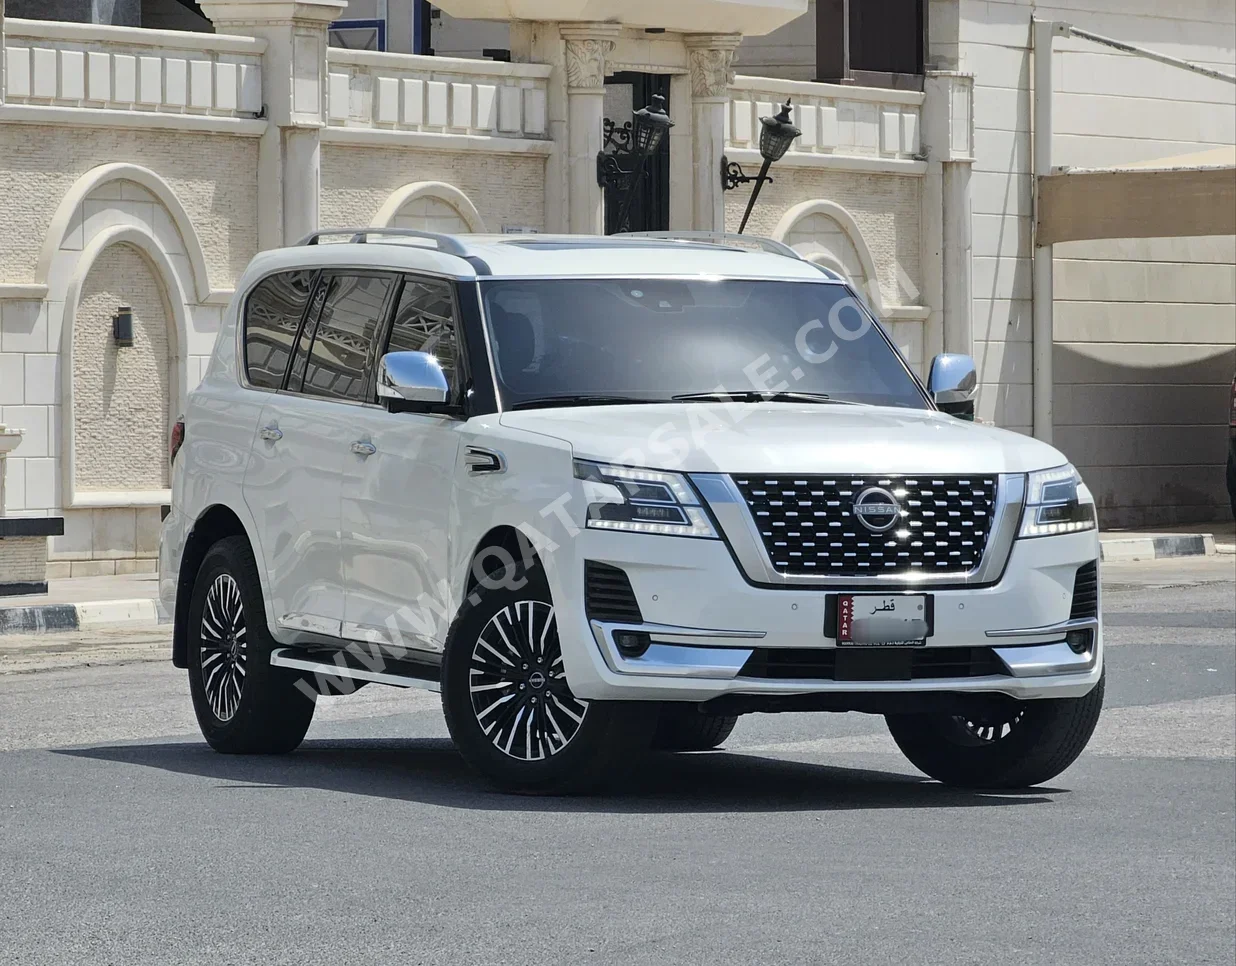 Nissan  Patrol  Platinum  2022  Automatic  43,000 Km  6 Cylinder  Four Wheel Drive (4WD)  SUV  White  With Warranty